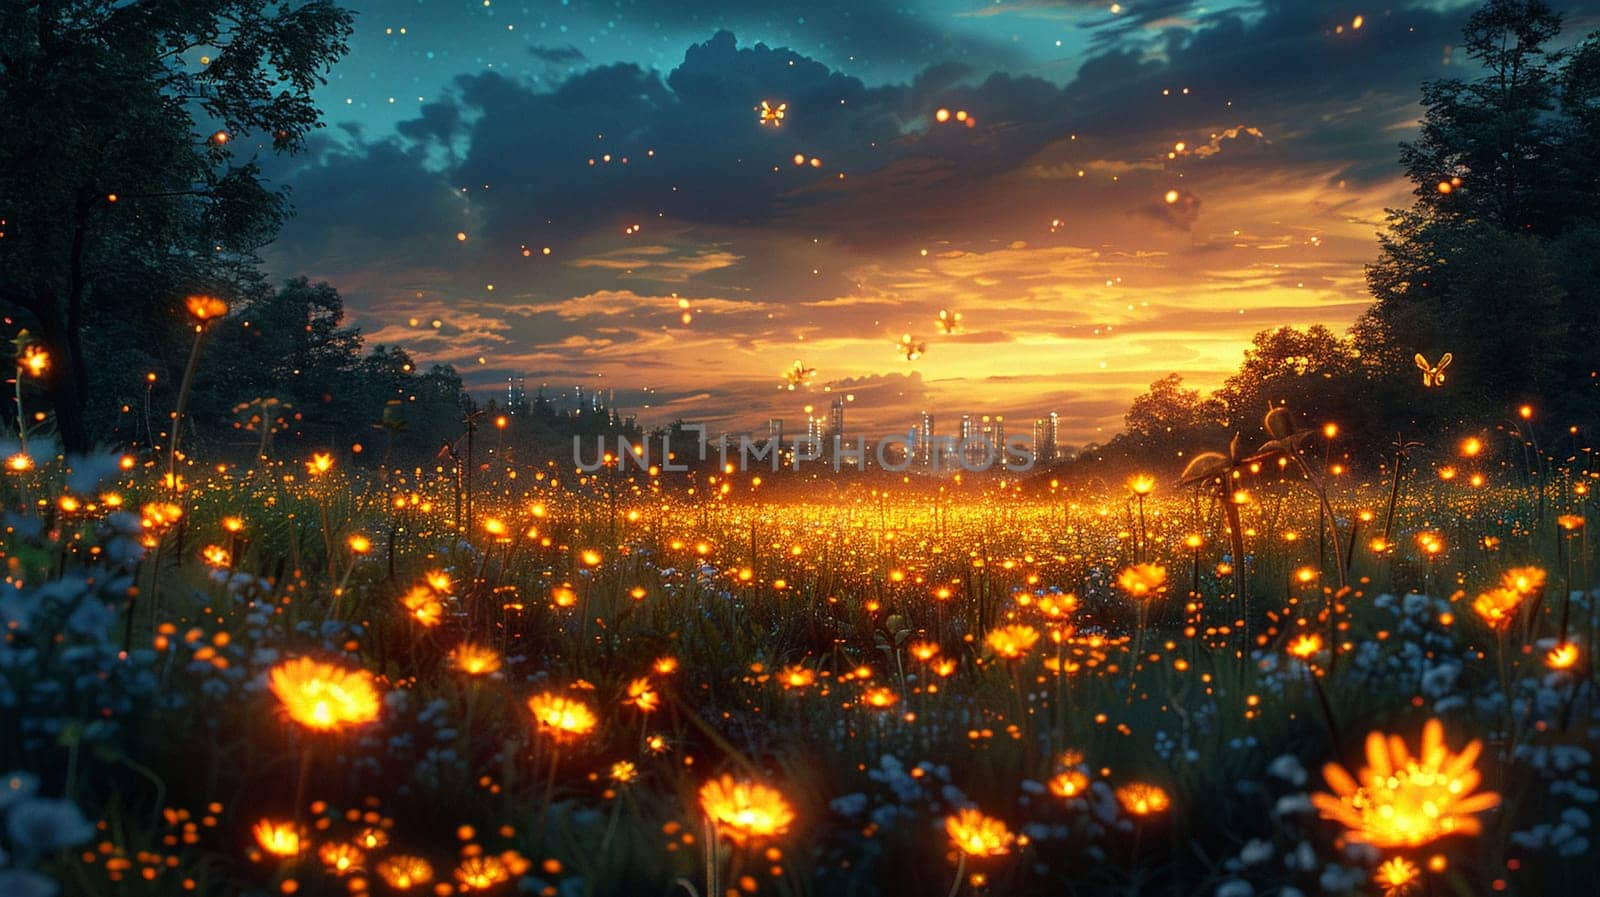 Twinkling Fireflies Dancing in a Twilight Meadow, The lights blur into dusk, summer's soft lanterns.